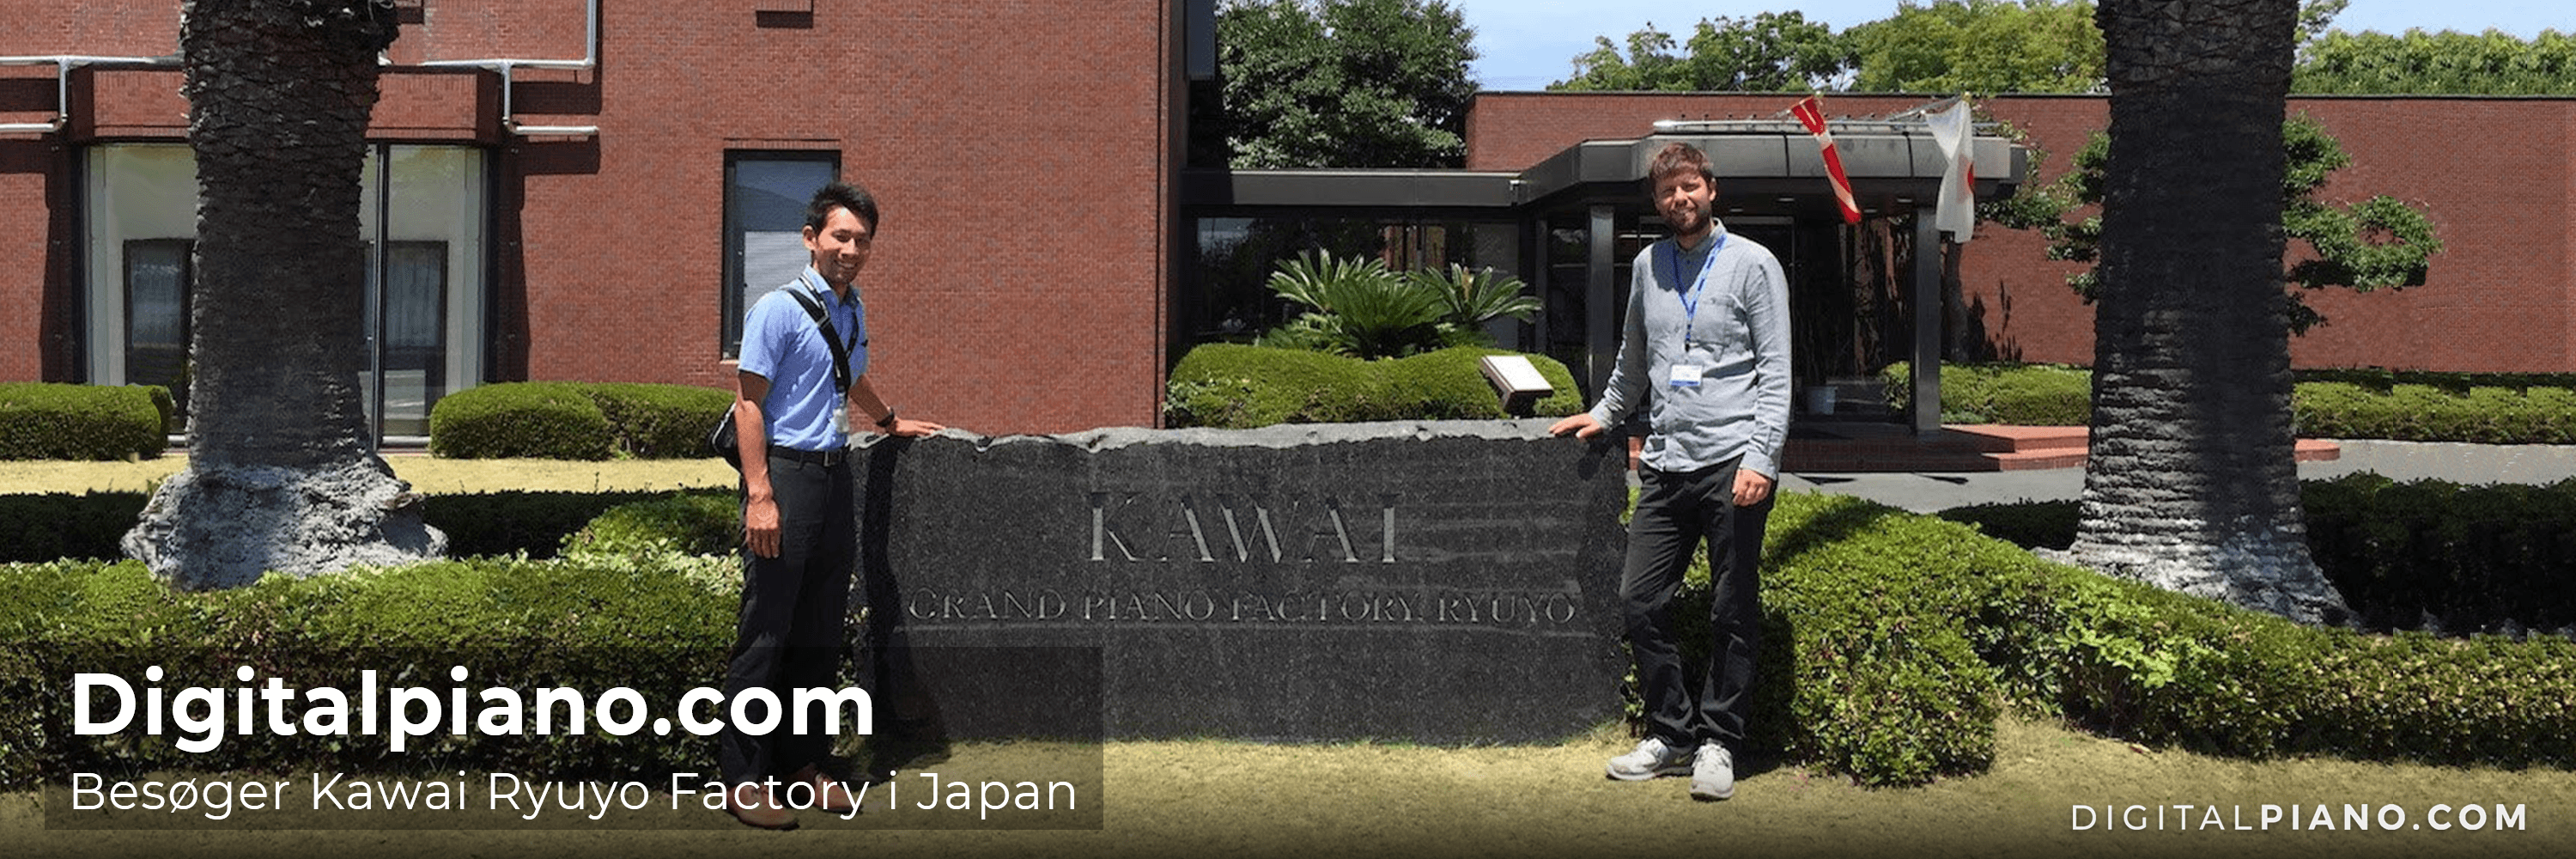 Digitalpiano besøger Kawai fabrikken i Japan